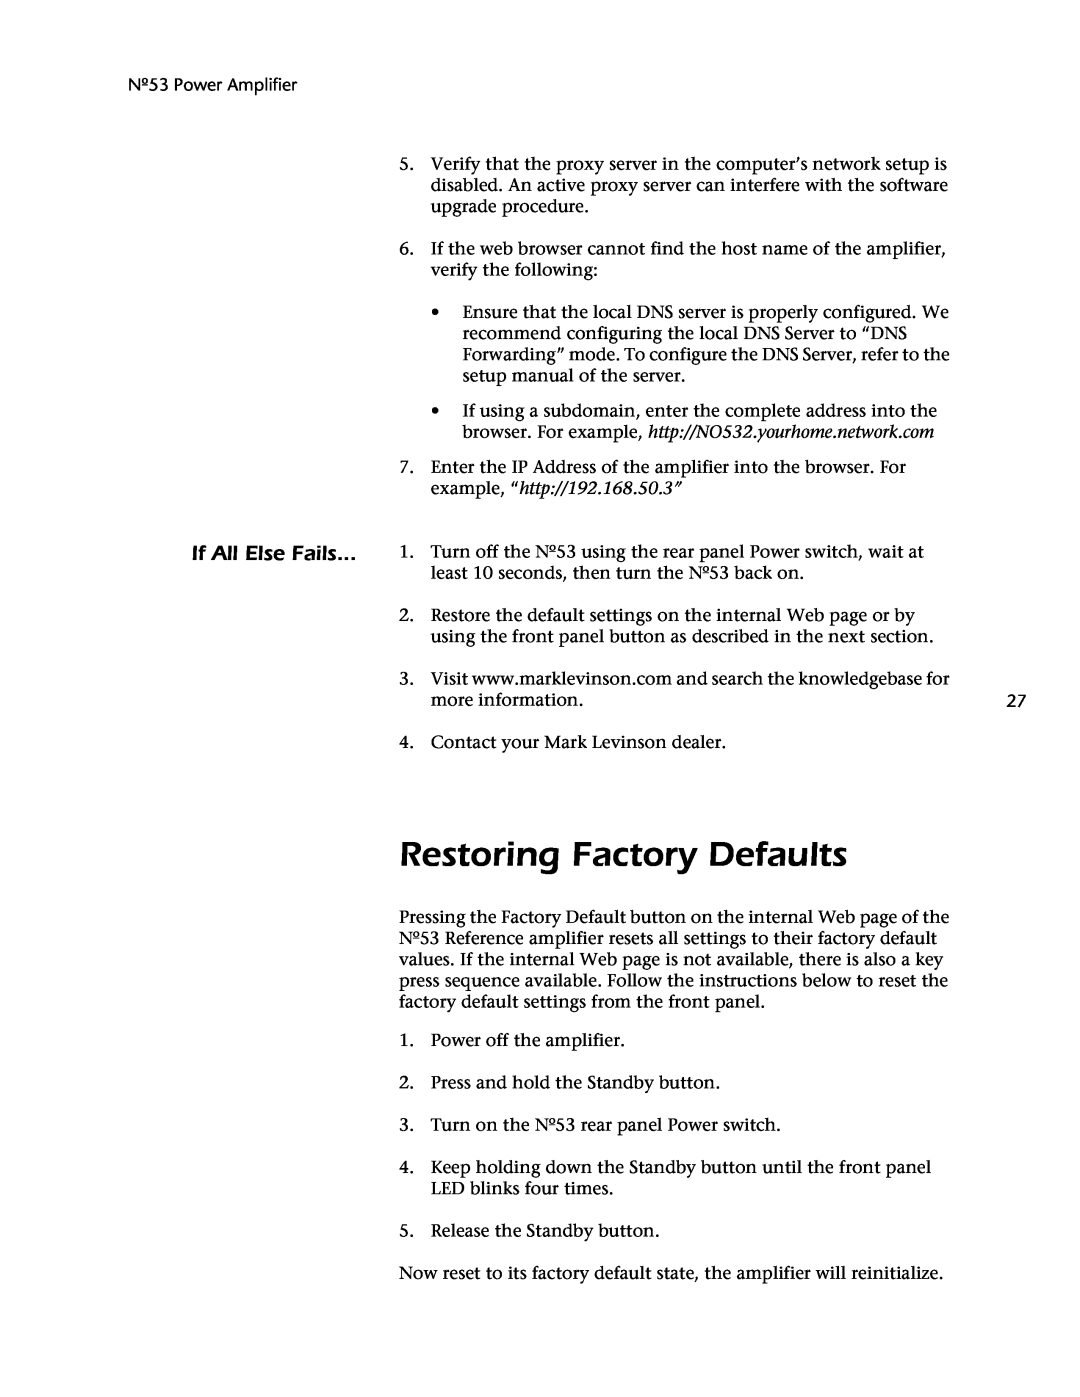 Mark Levinson 53 owner manual Restoring Factory Defaults, If All Else Fails 